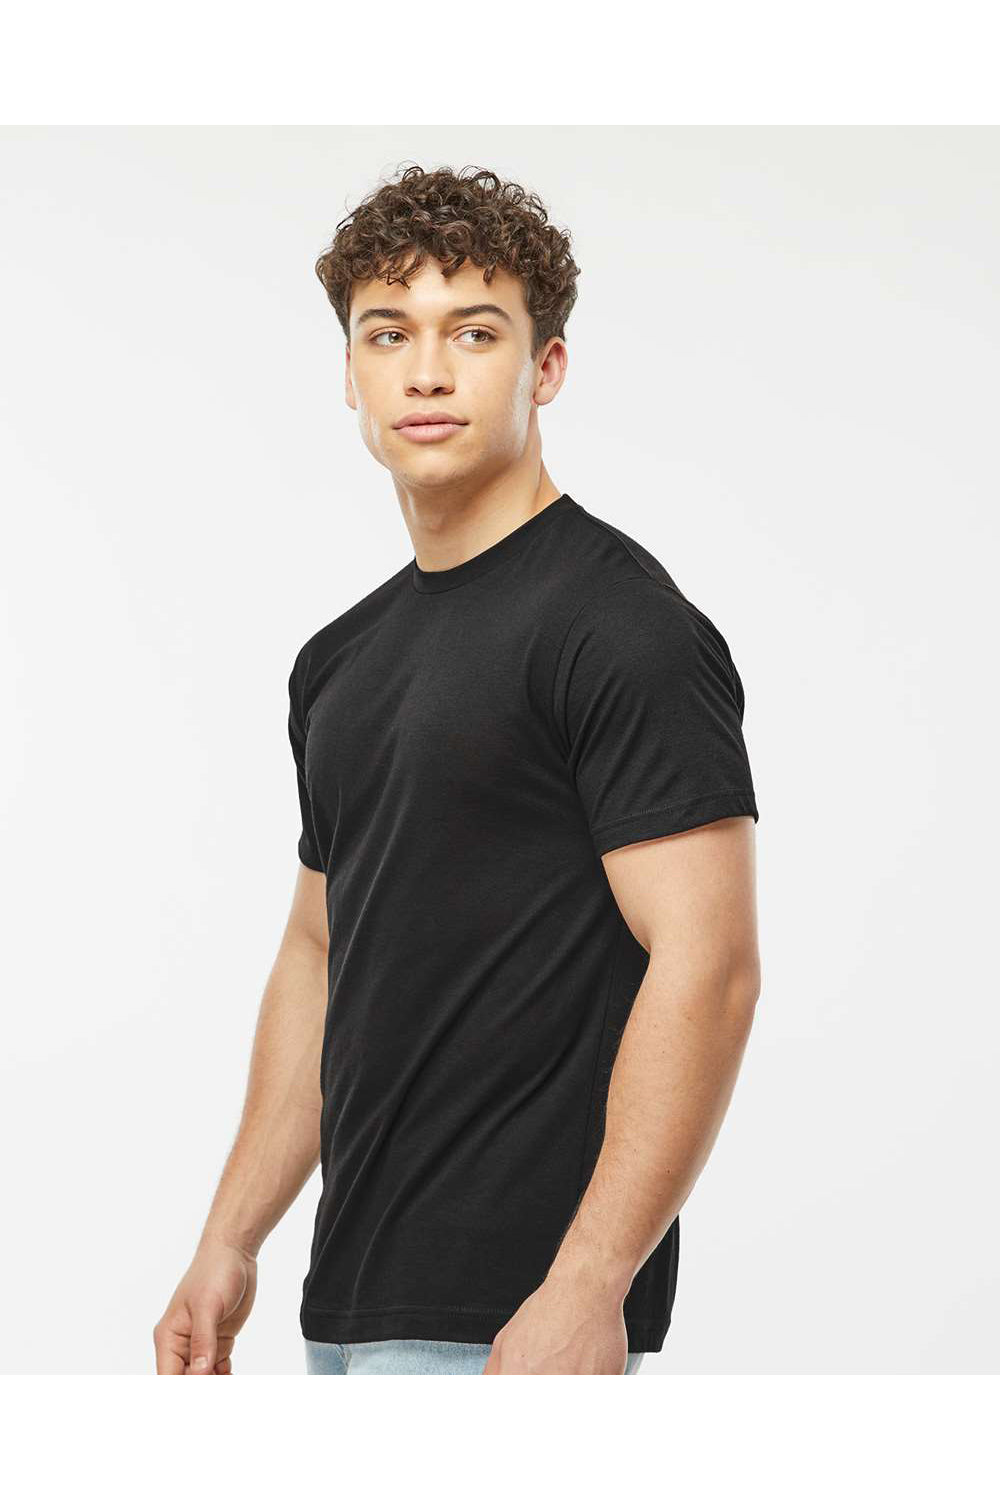 Tultex 241 Mens Poly-Rich Short Sleeve Crewneck T-Shirt Black Model Side